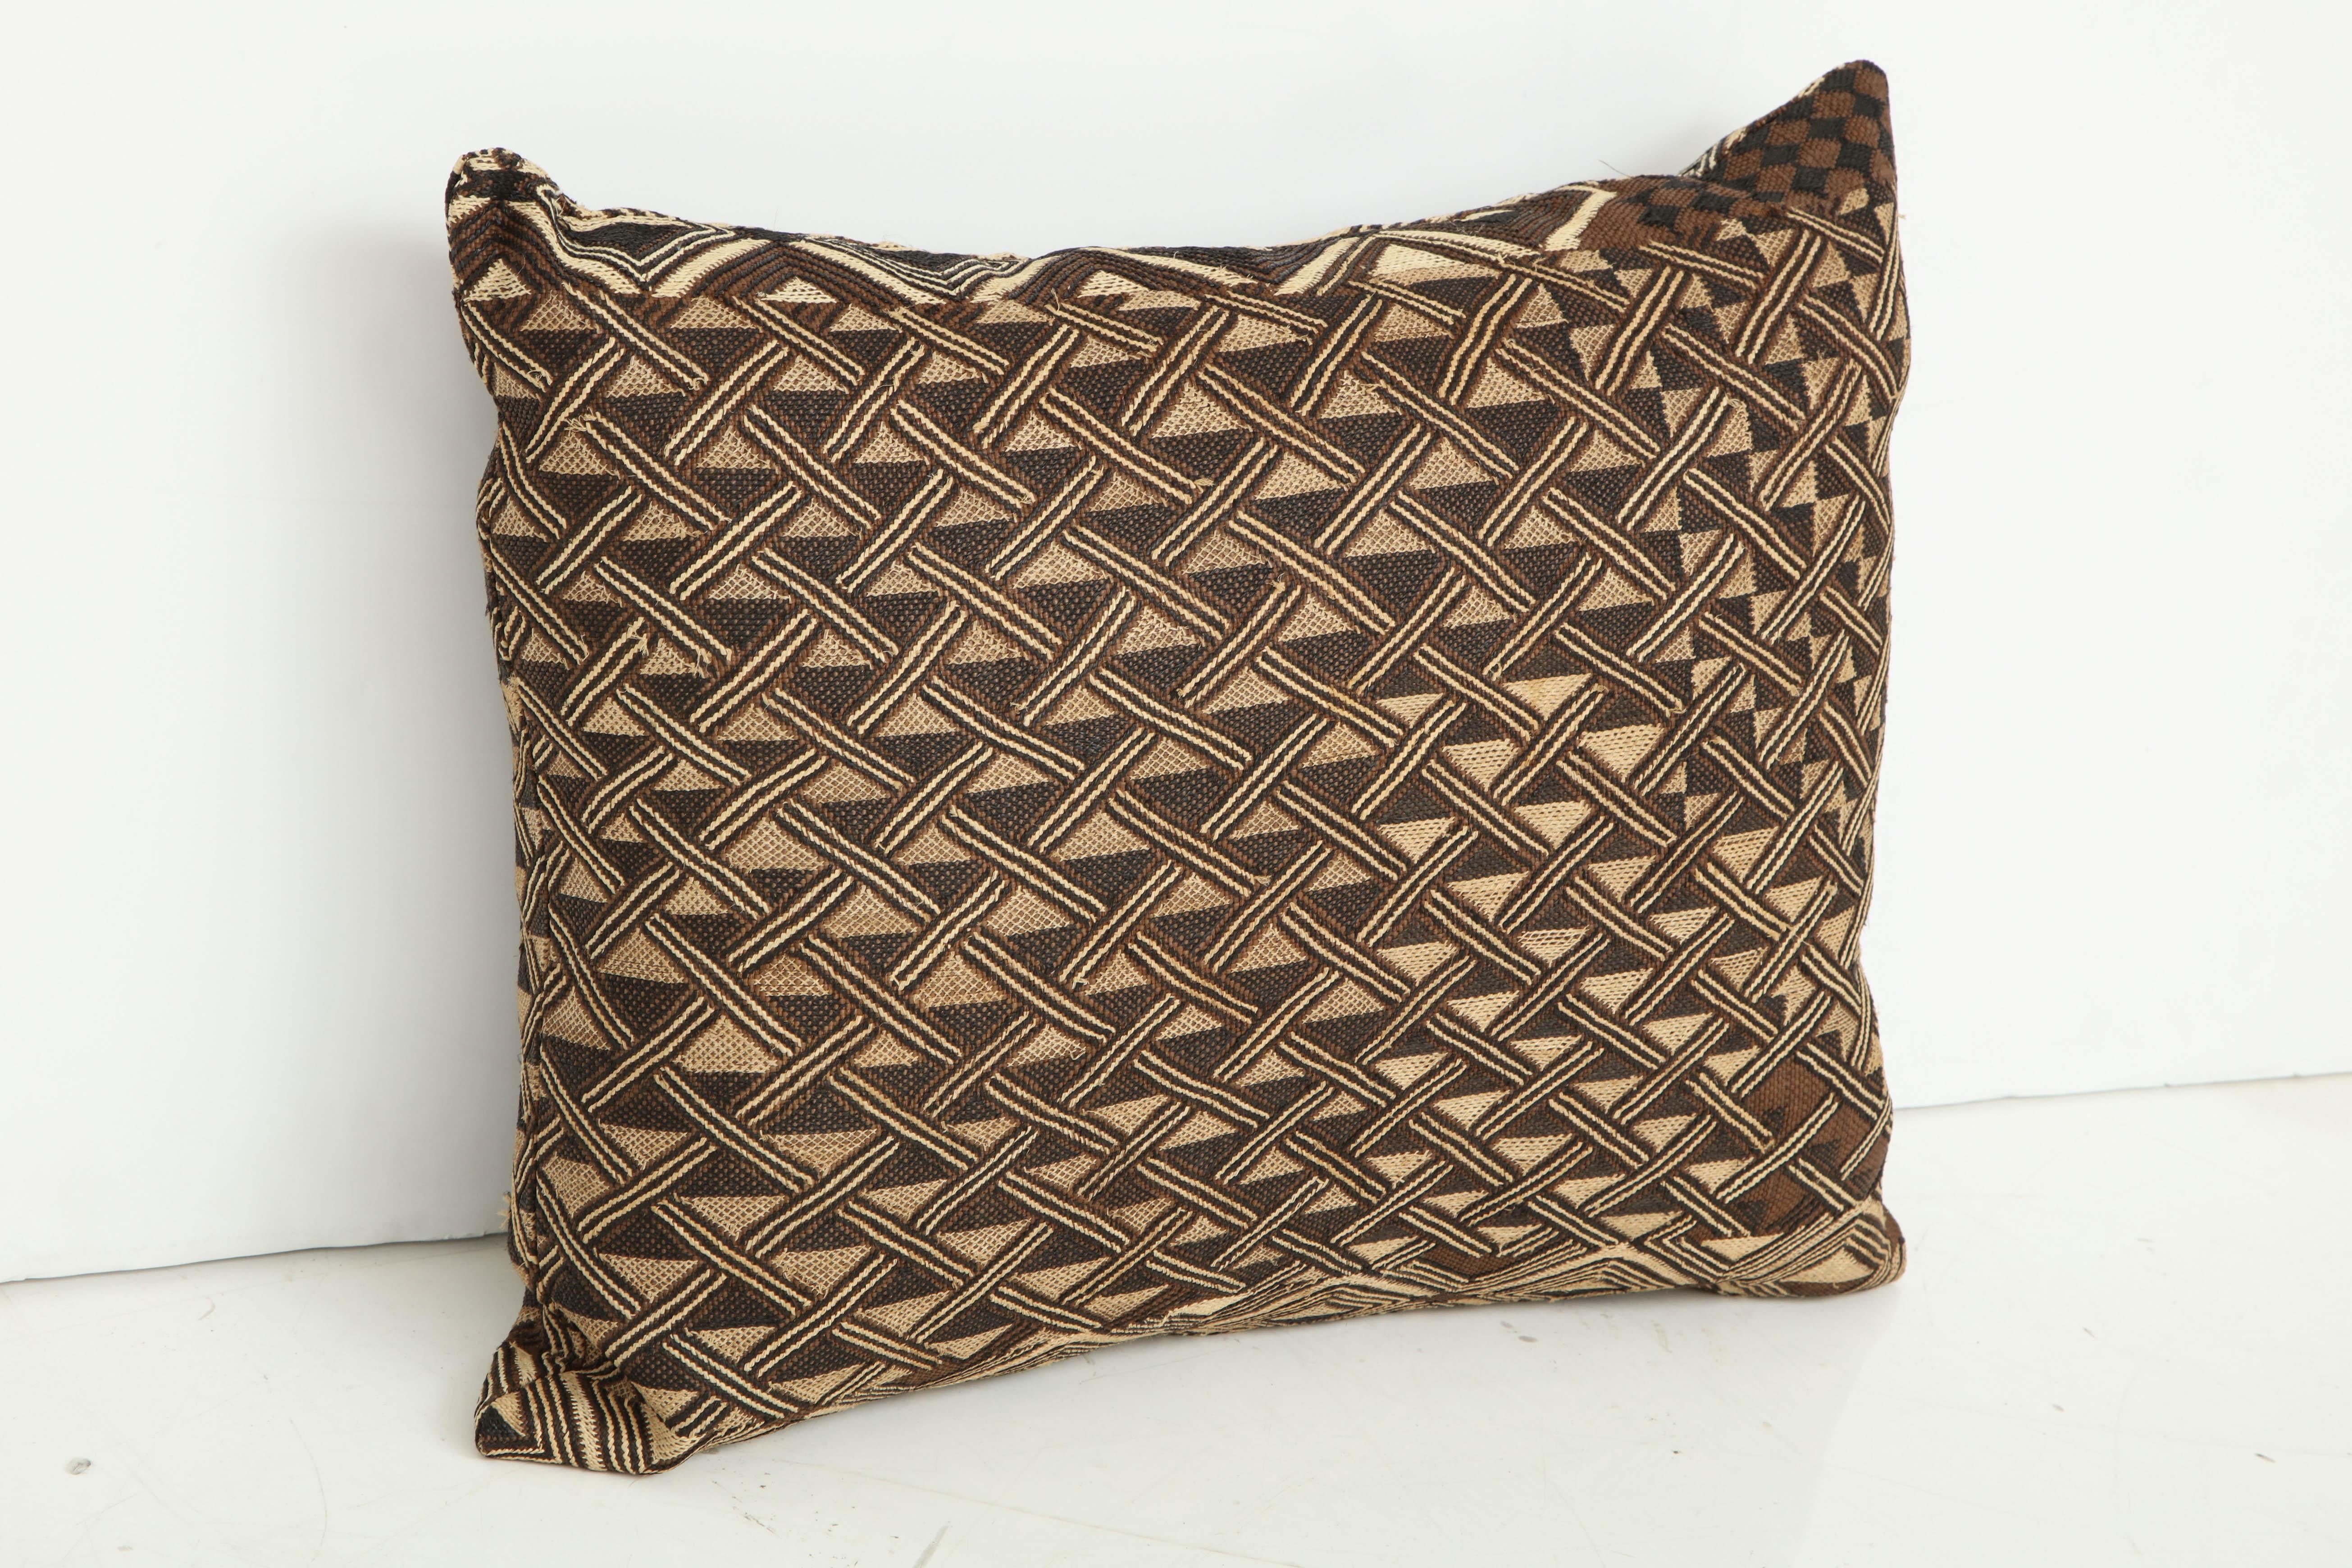 Antique Raffia Kuba cloth pillow, beige and brown pattern.